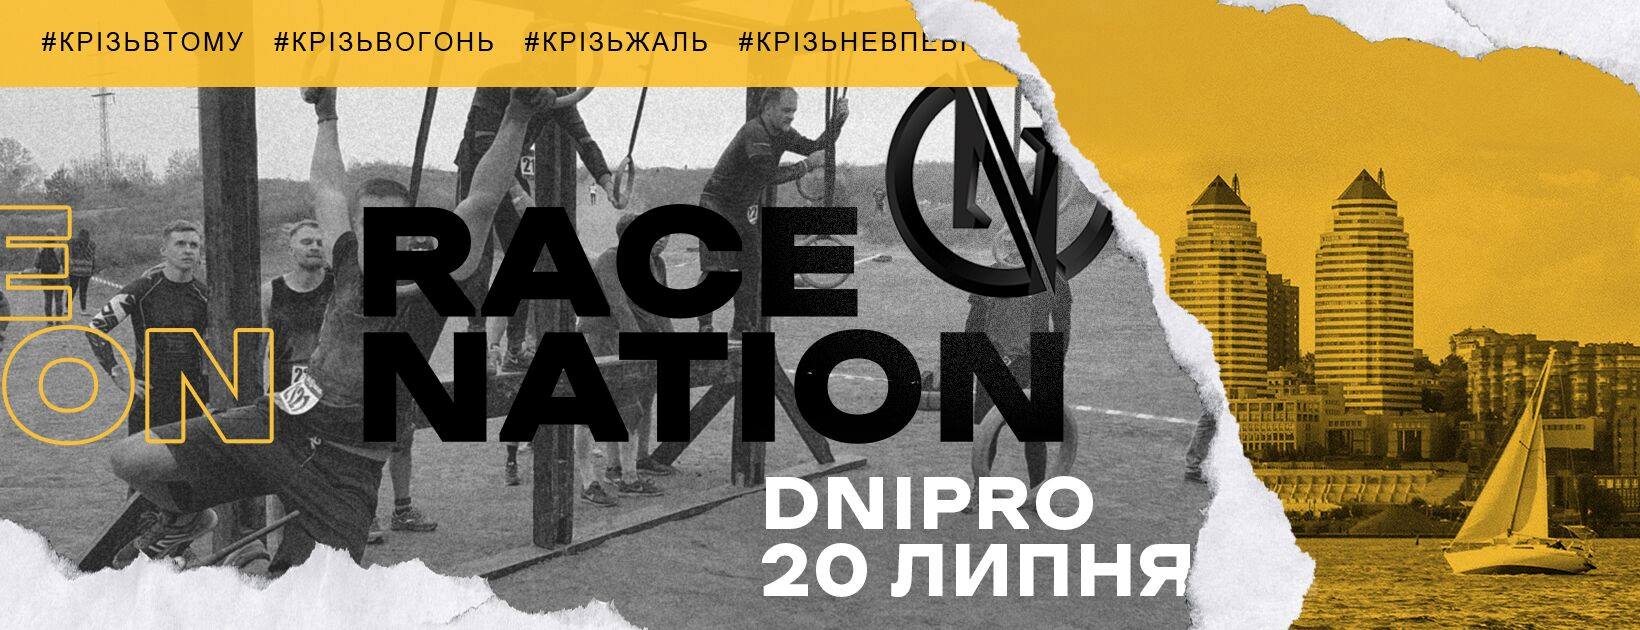 Race Nation. Dnipro Днепр, 20.07.2019, цена, купить билеты. Афиша Днепра